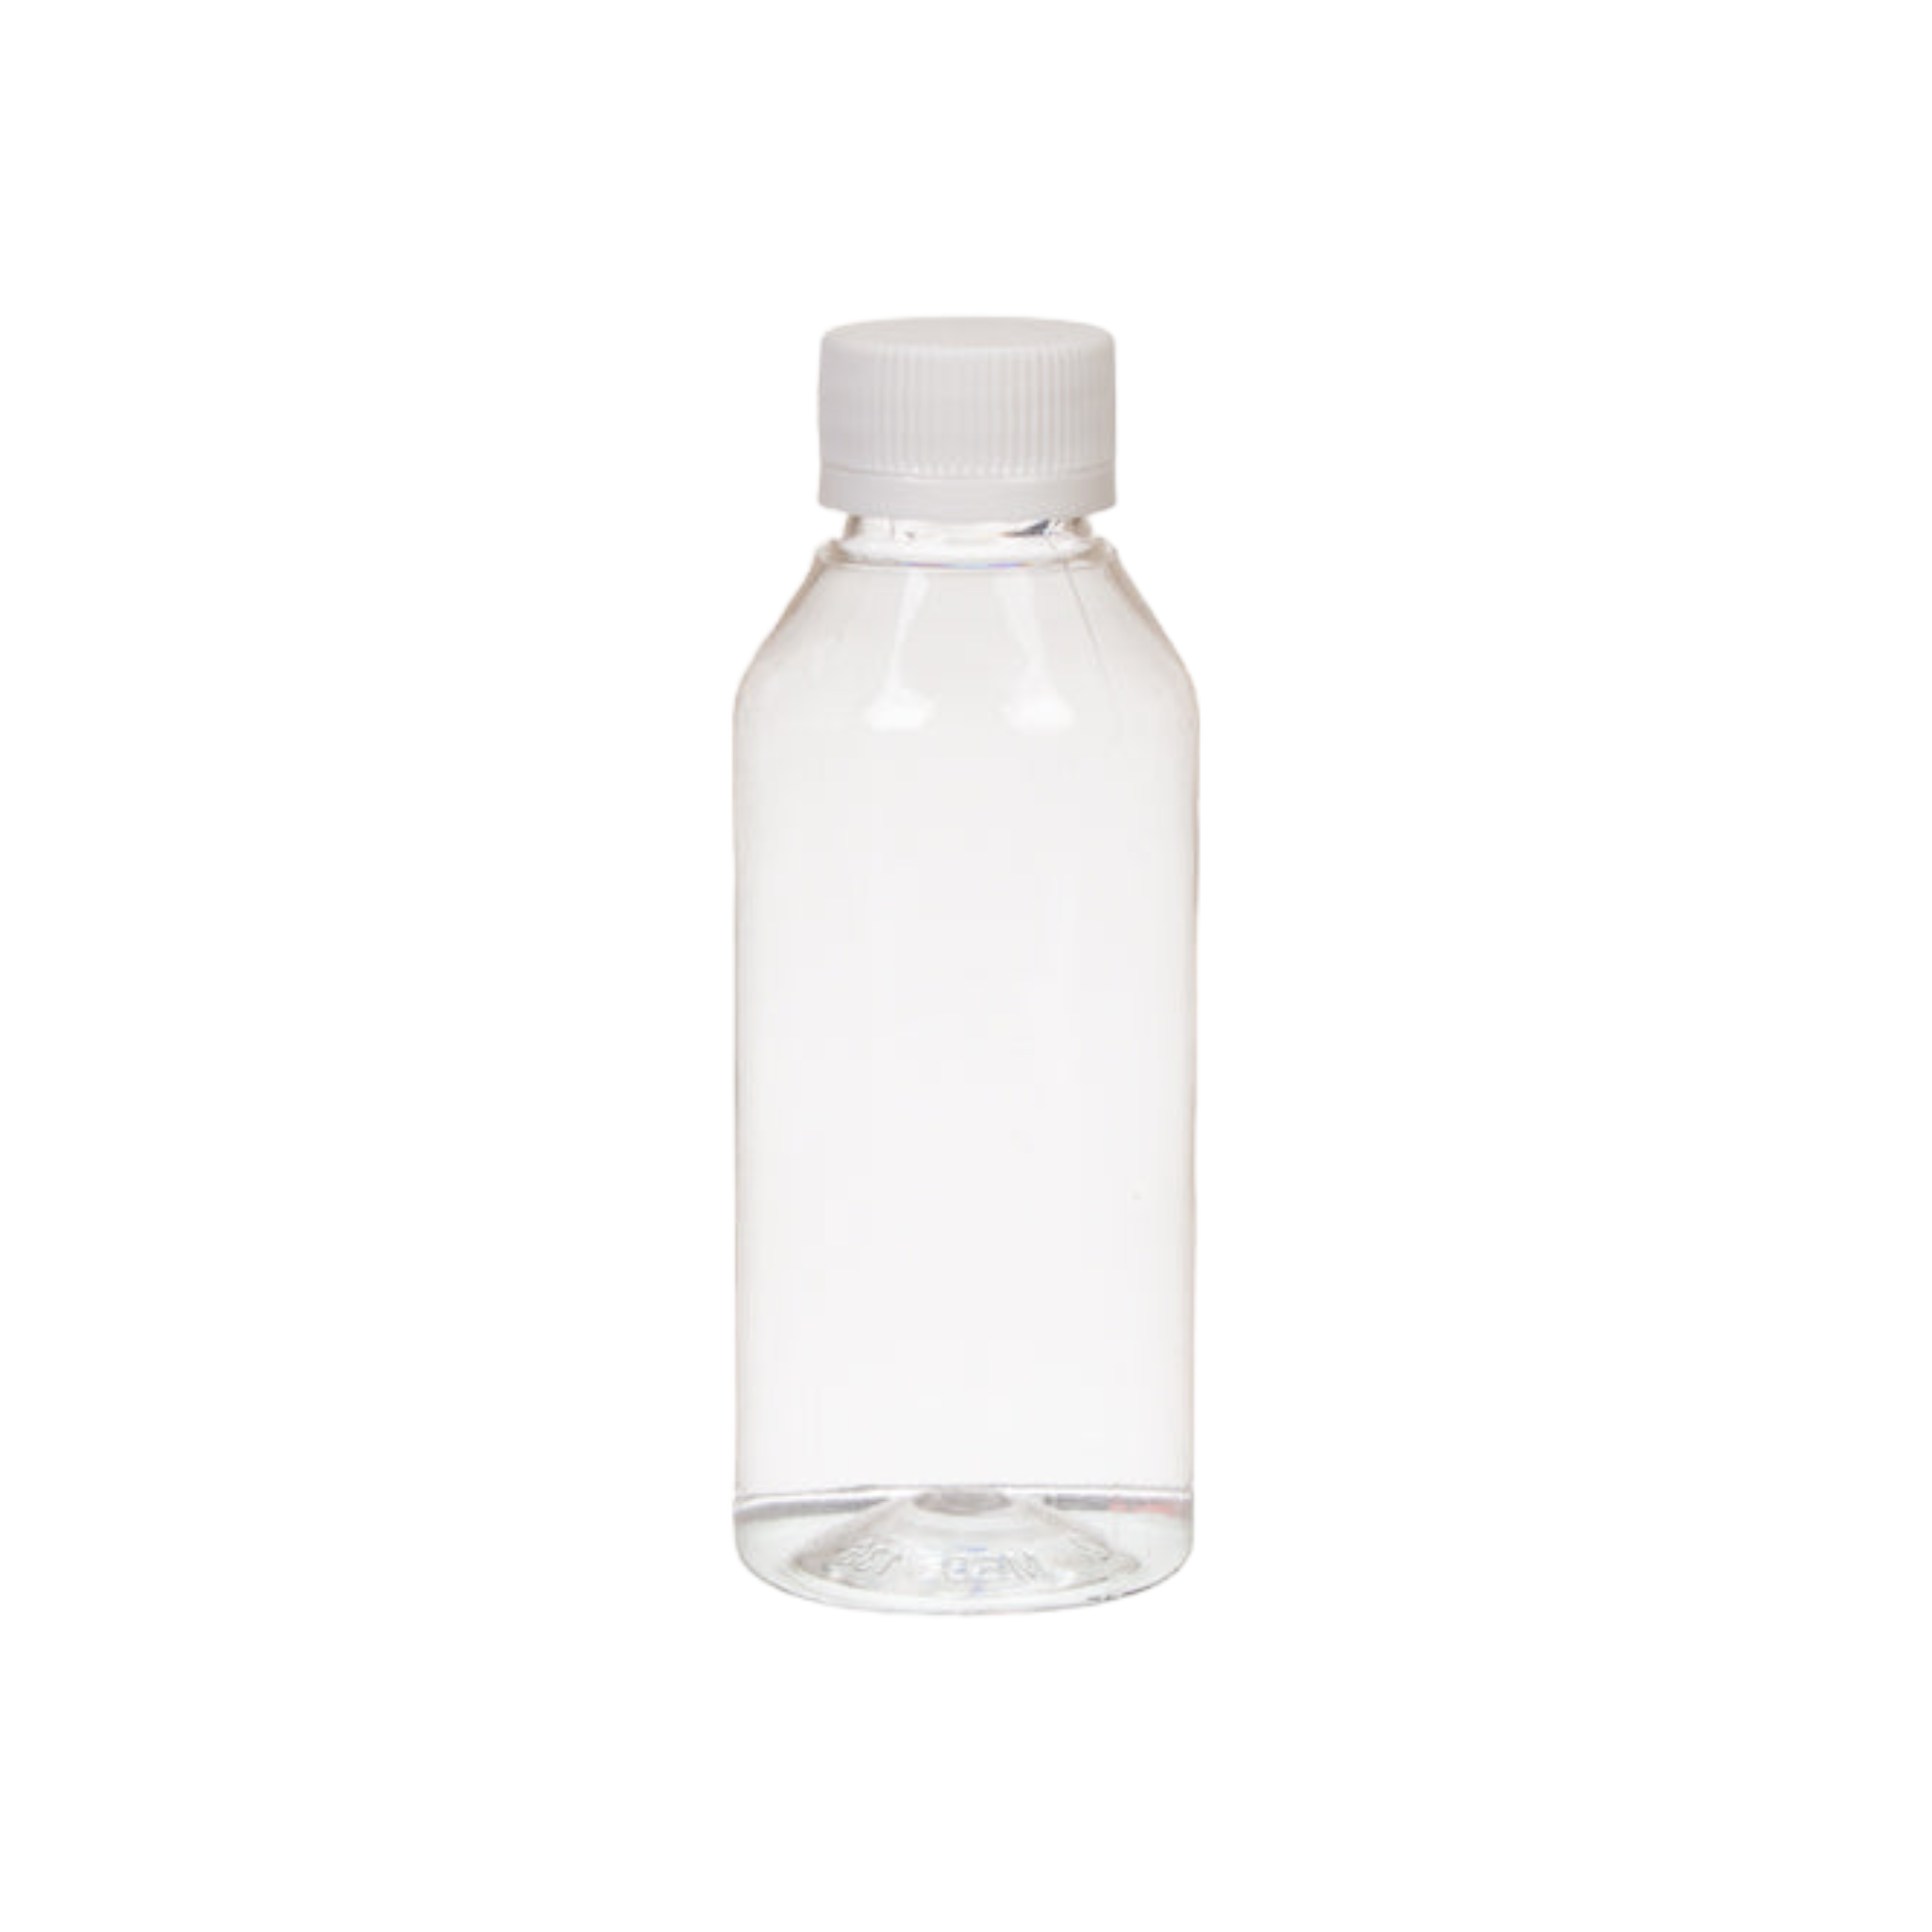 100ml PVC Boston Bottle 100ml Clear Plastic with Lid